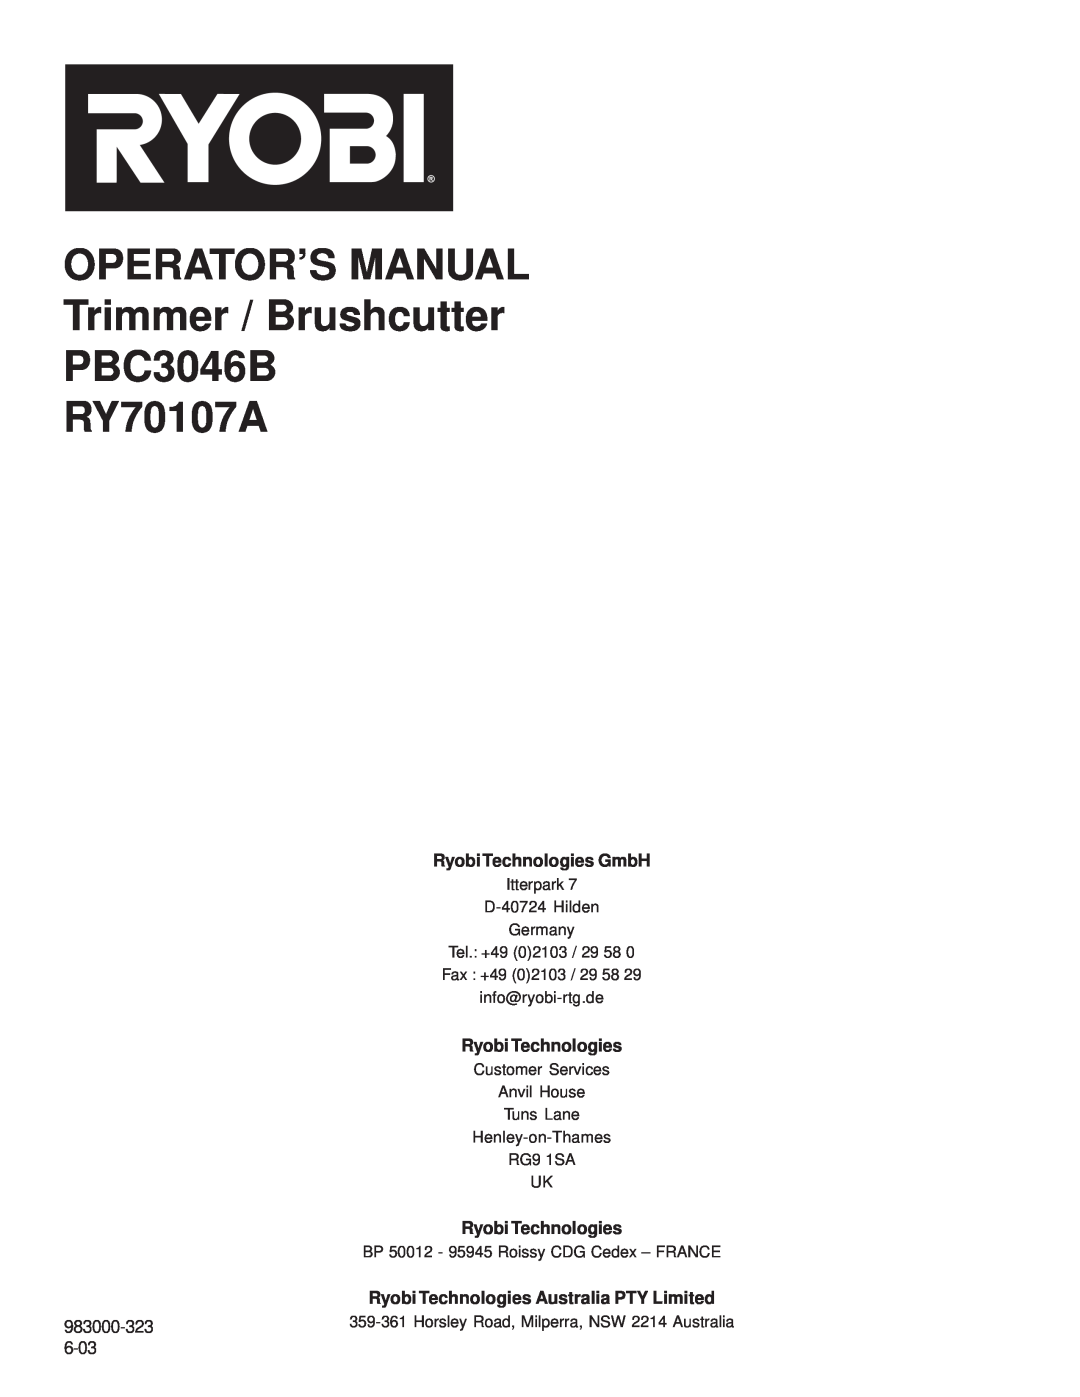 Ryobi Outdoor manual Ryobi Technologies GmbH, OPERATOR’S MANUAL Trimmer / Brushcutter PBC3046B RY70107A 